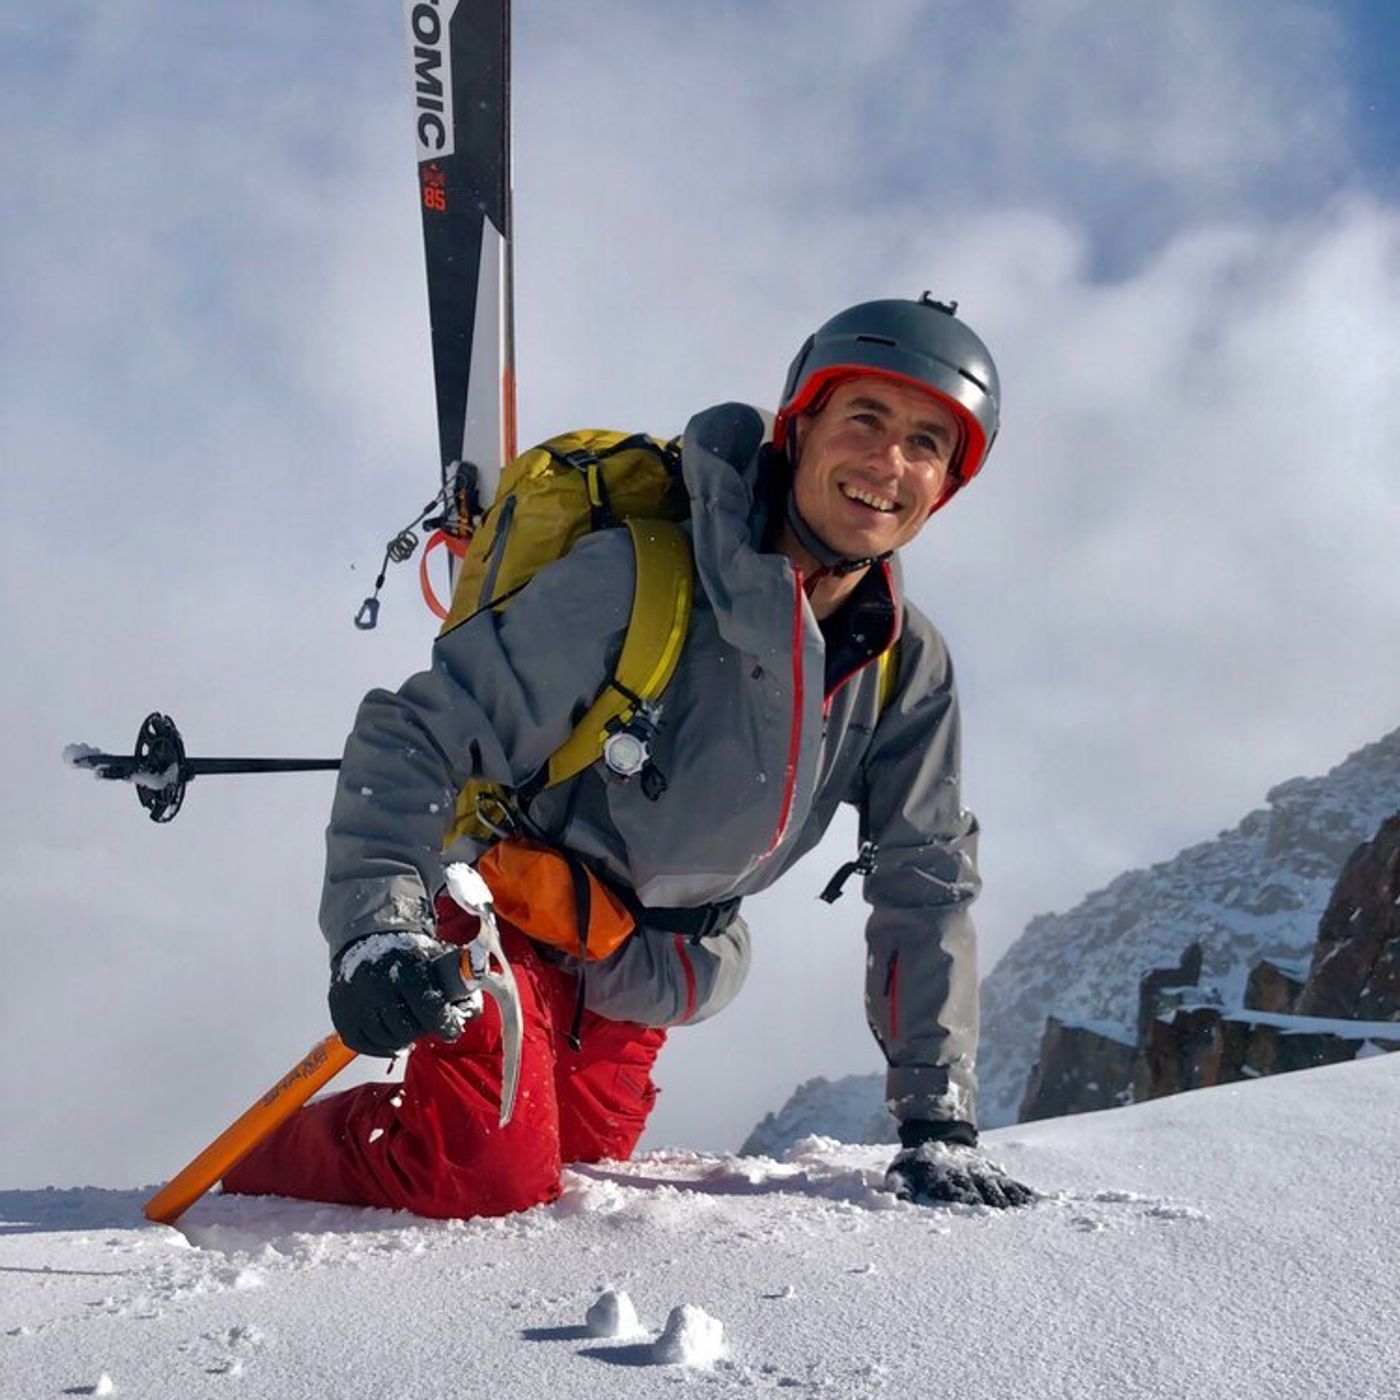 202: Blair Aitken, British Backcountry Ski expert